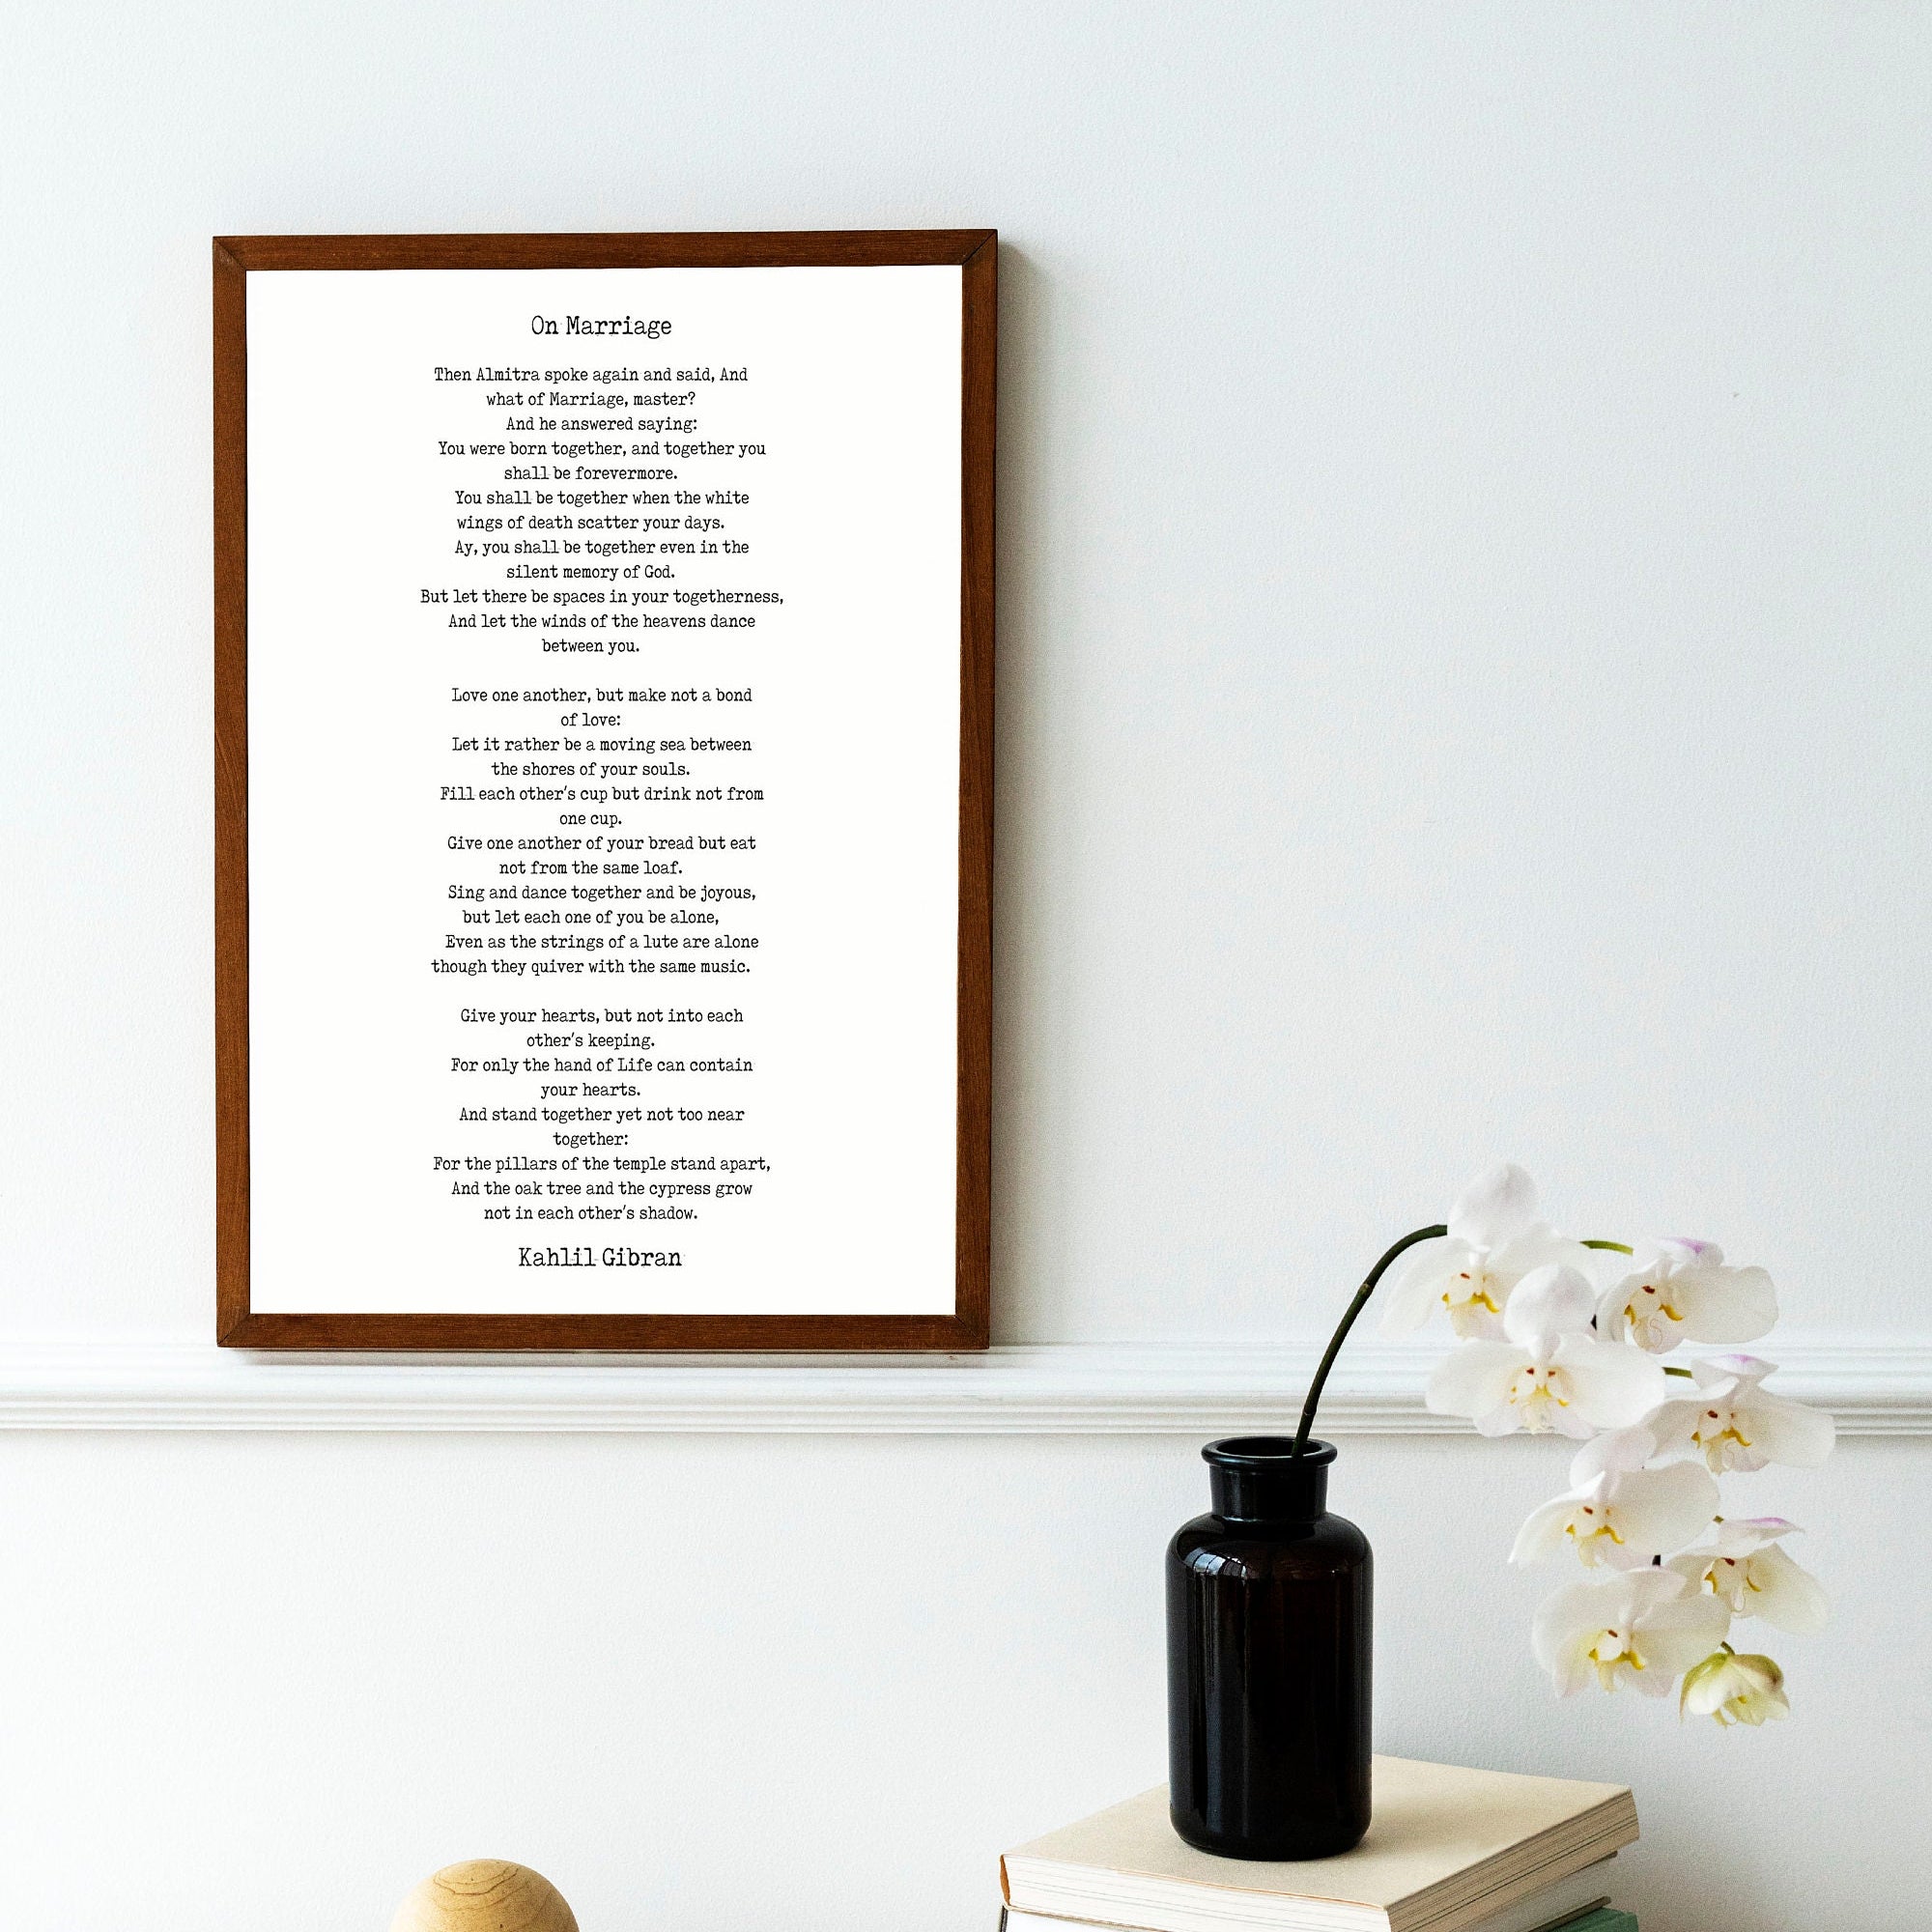 On Marriage Poem Kahlil Gibran Wall Art Prints Framed or Unframed in Vintage or Black & White, Love Poetry Literary Wall Art Decor